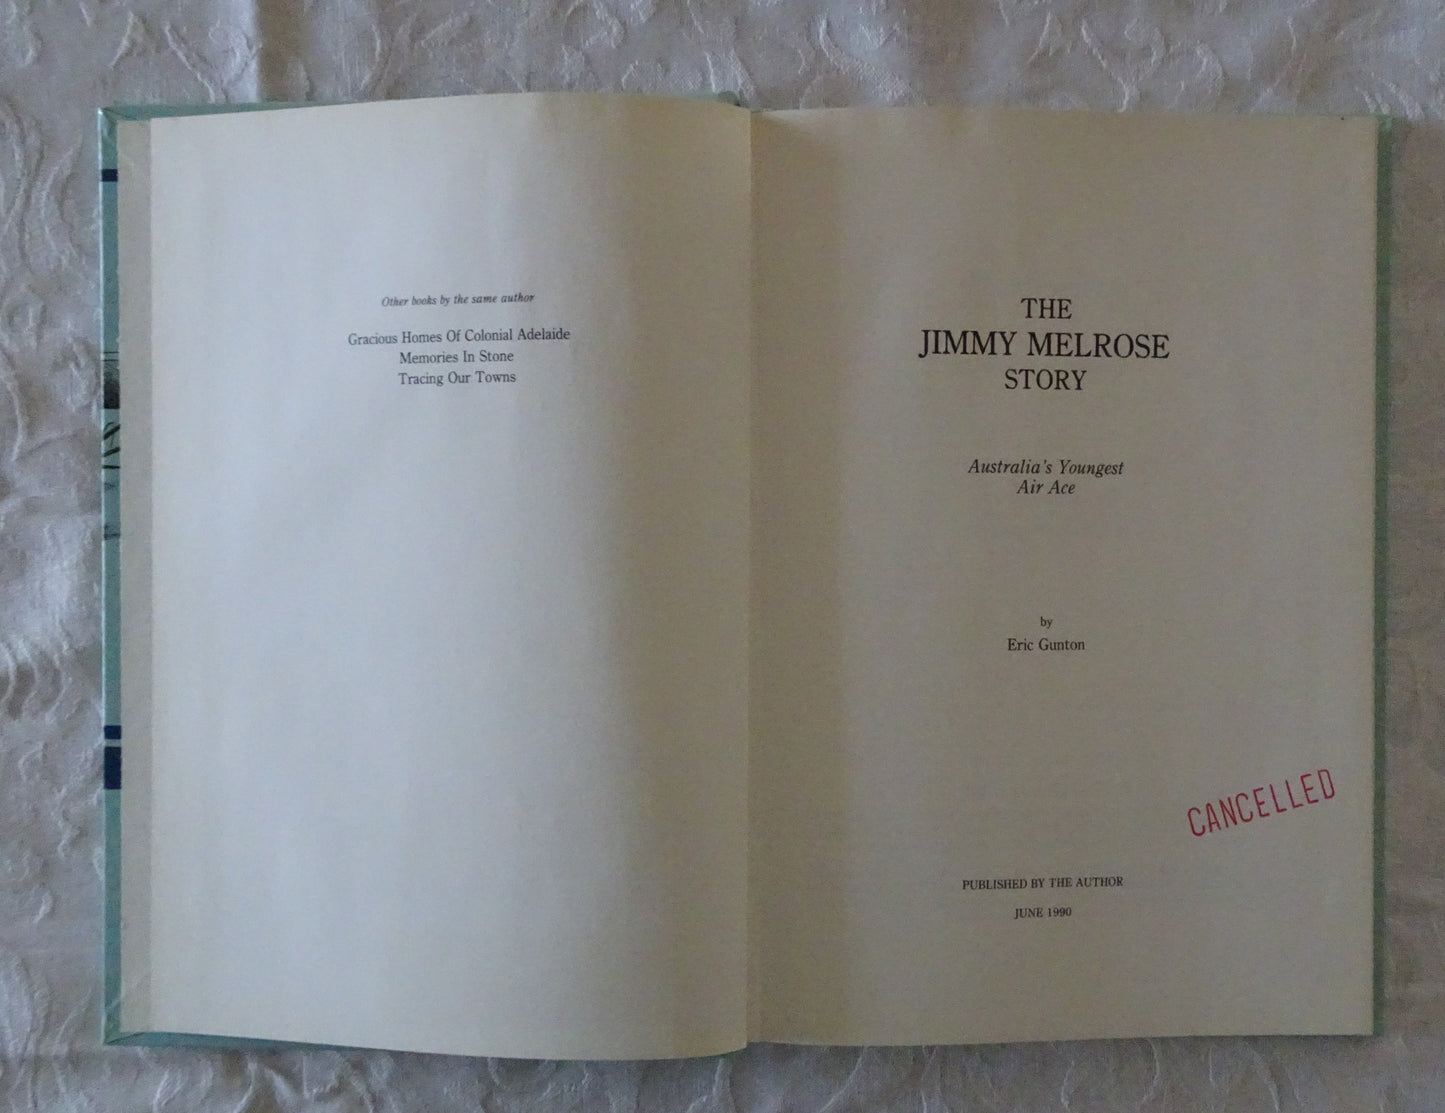 The Jimmy Melrose Story by Eric Gunton